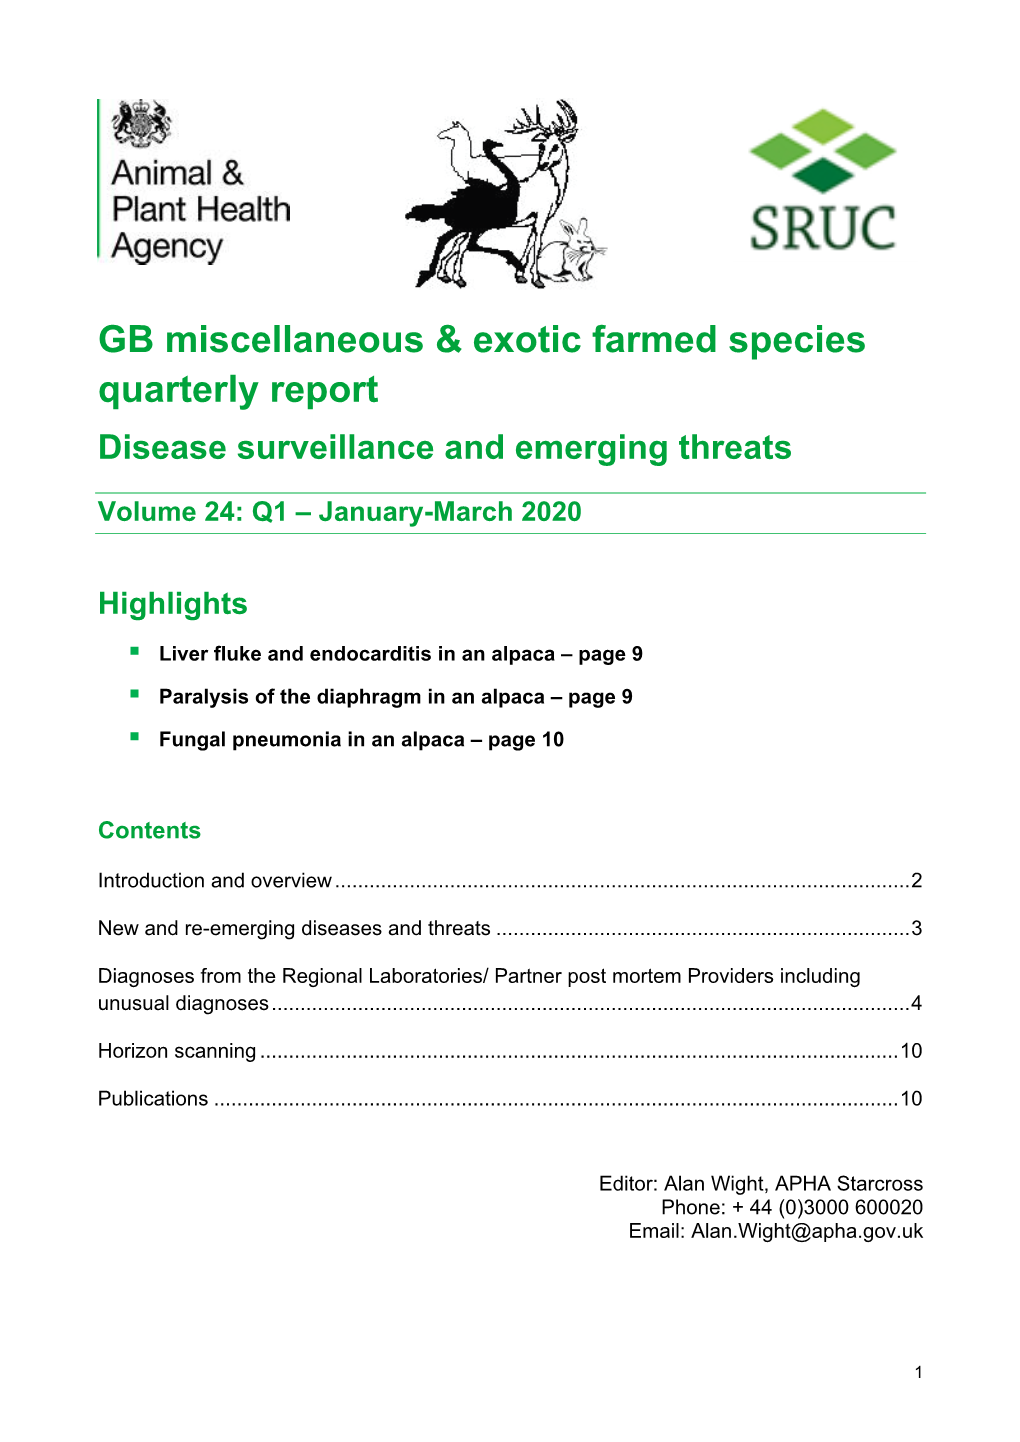 GB Miscellaneous & Exotic Farmed Species Quarterly Report